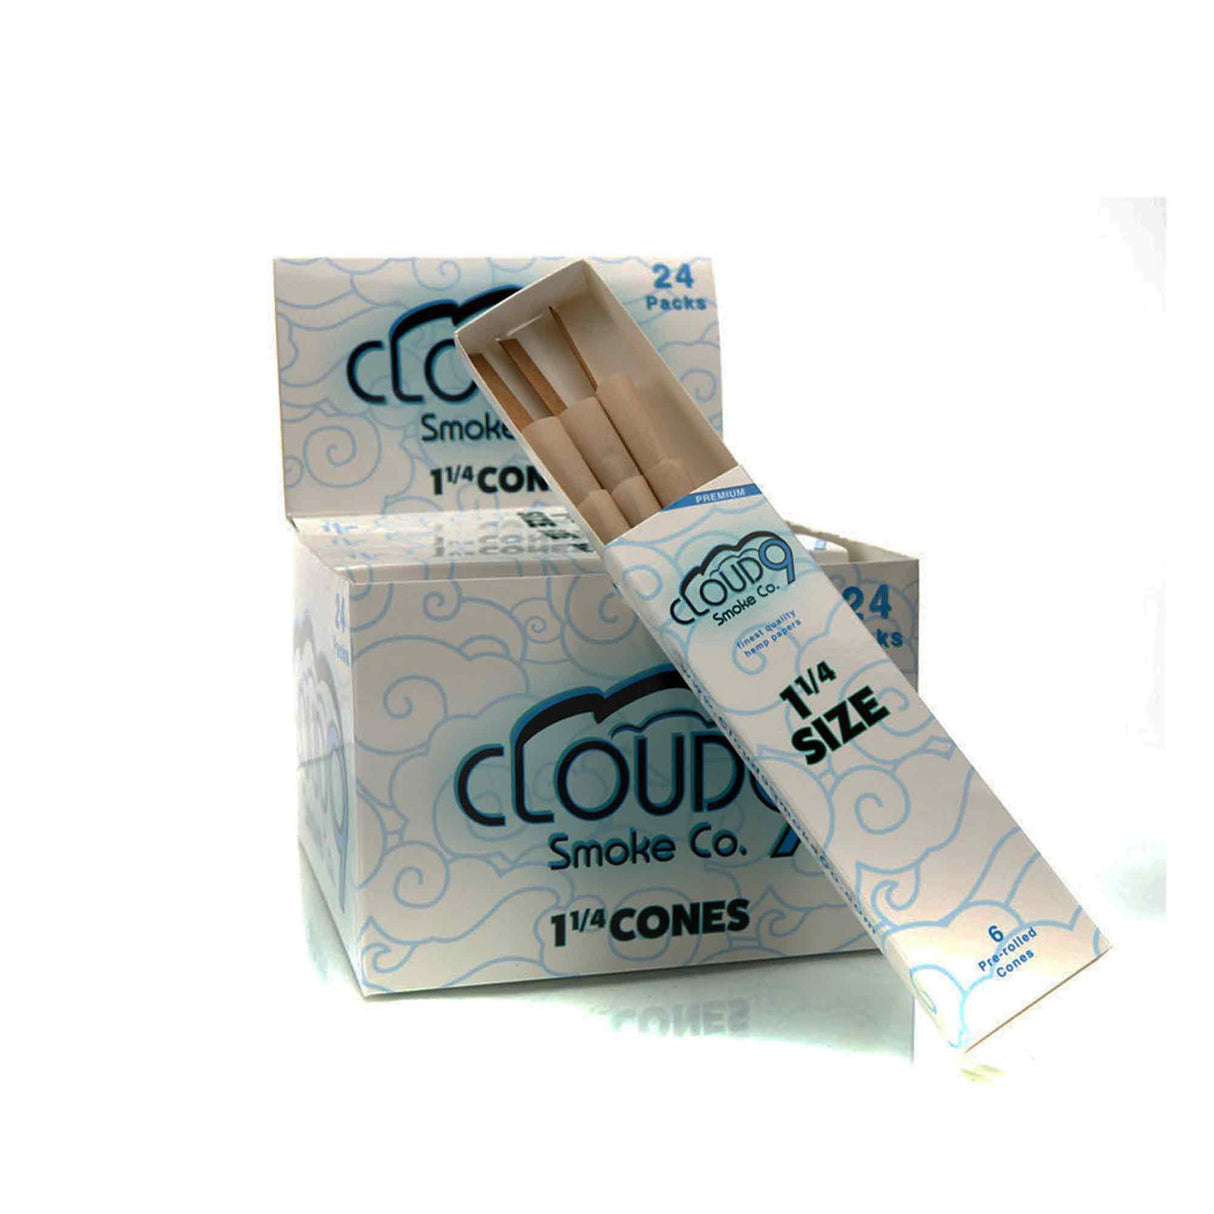 Cloud 9 1 1/4 Cones Box Open